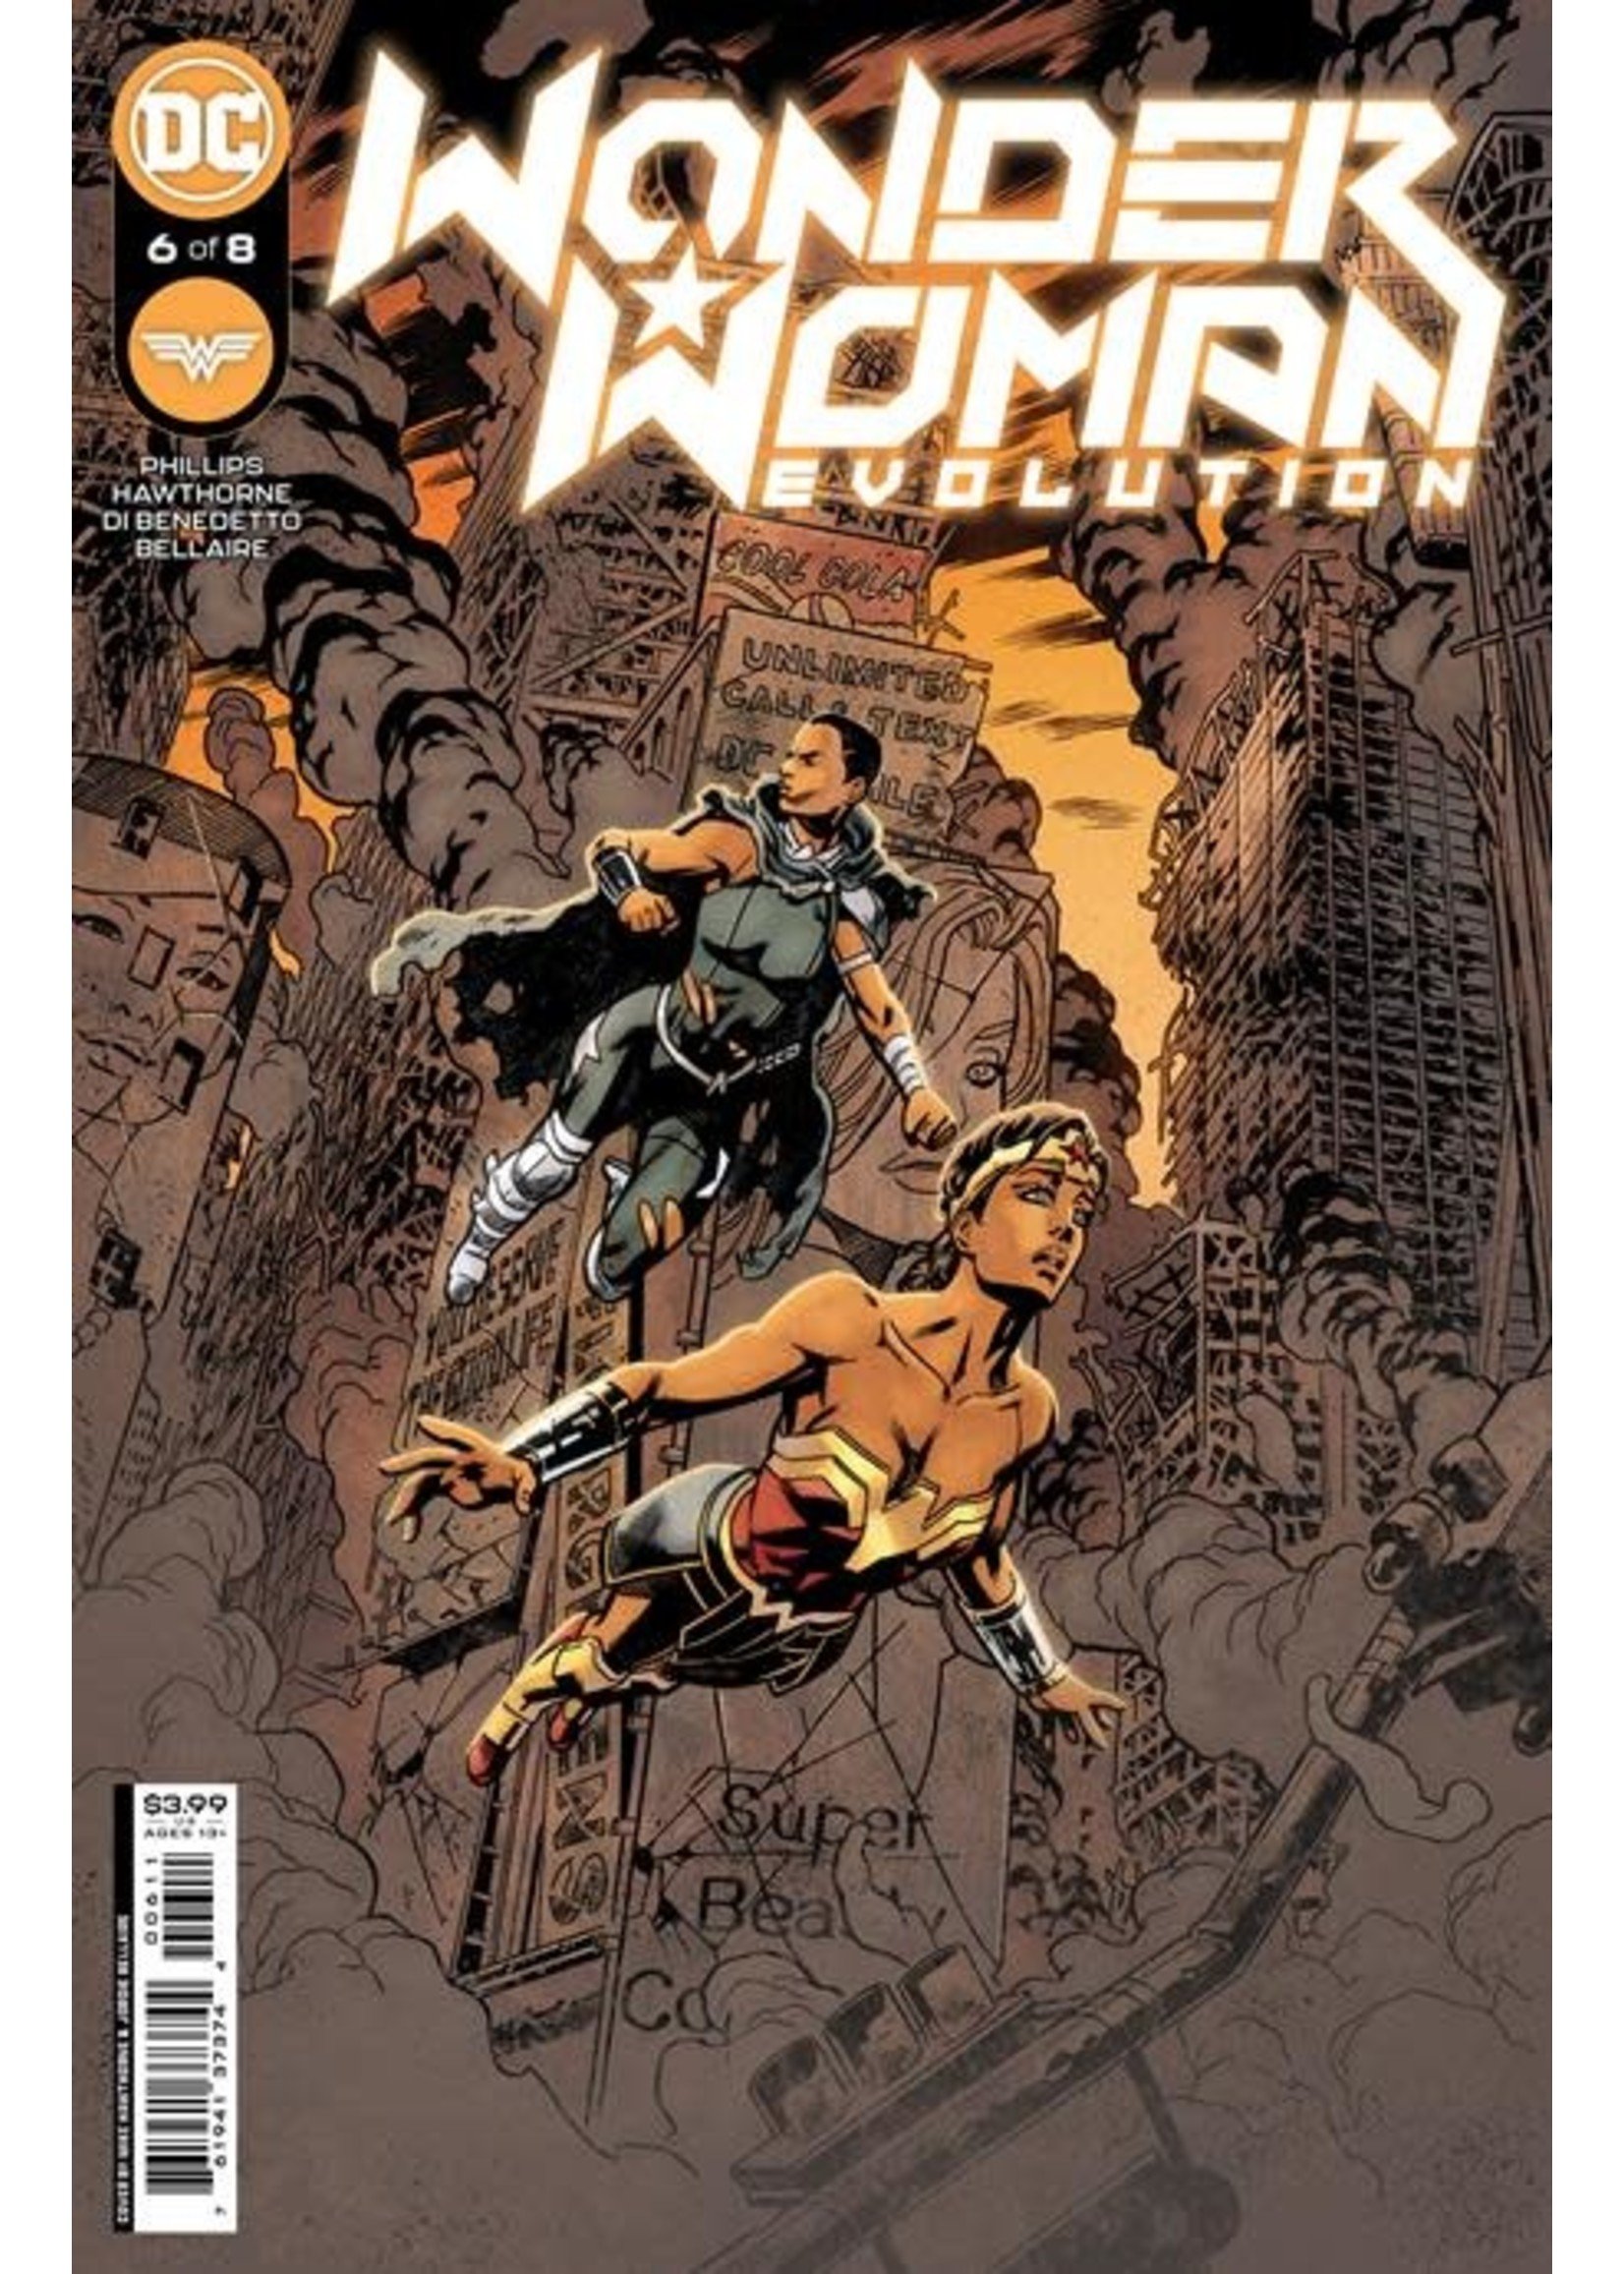 DC COMICS WONDER WOMAN EVOLUTION complete 8 issue series